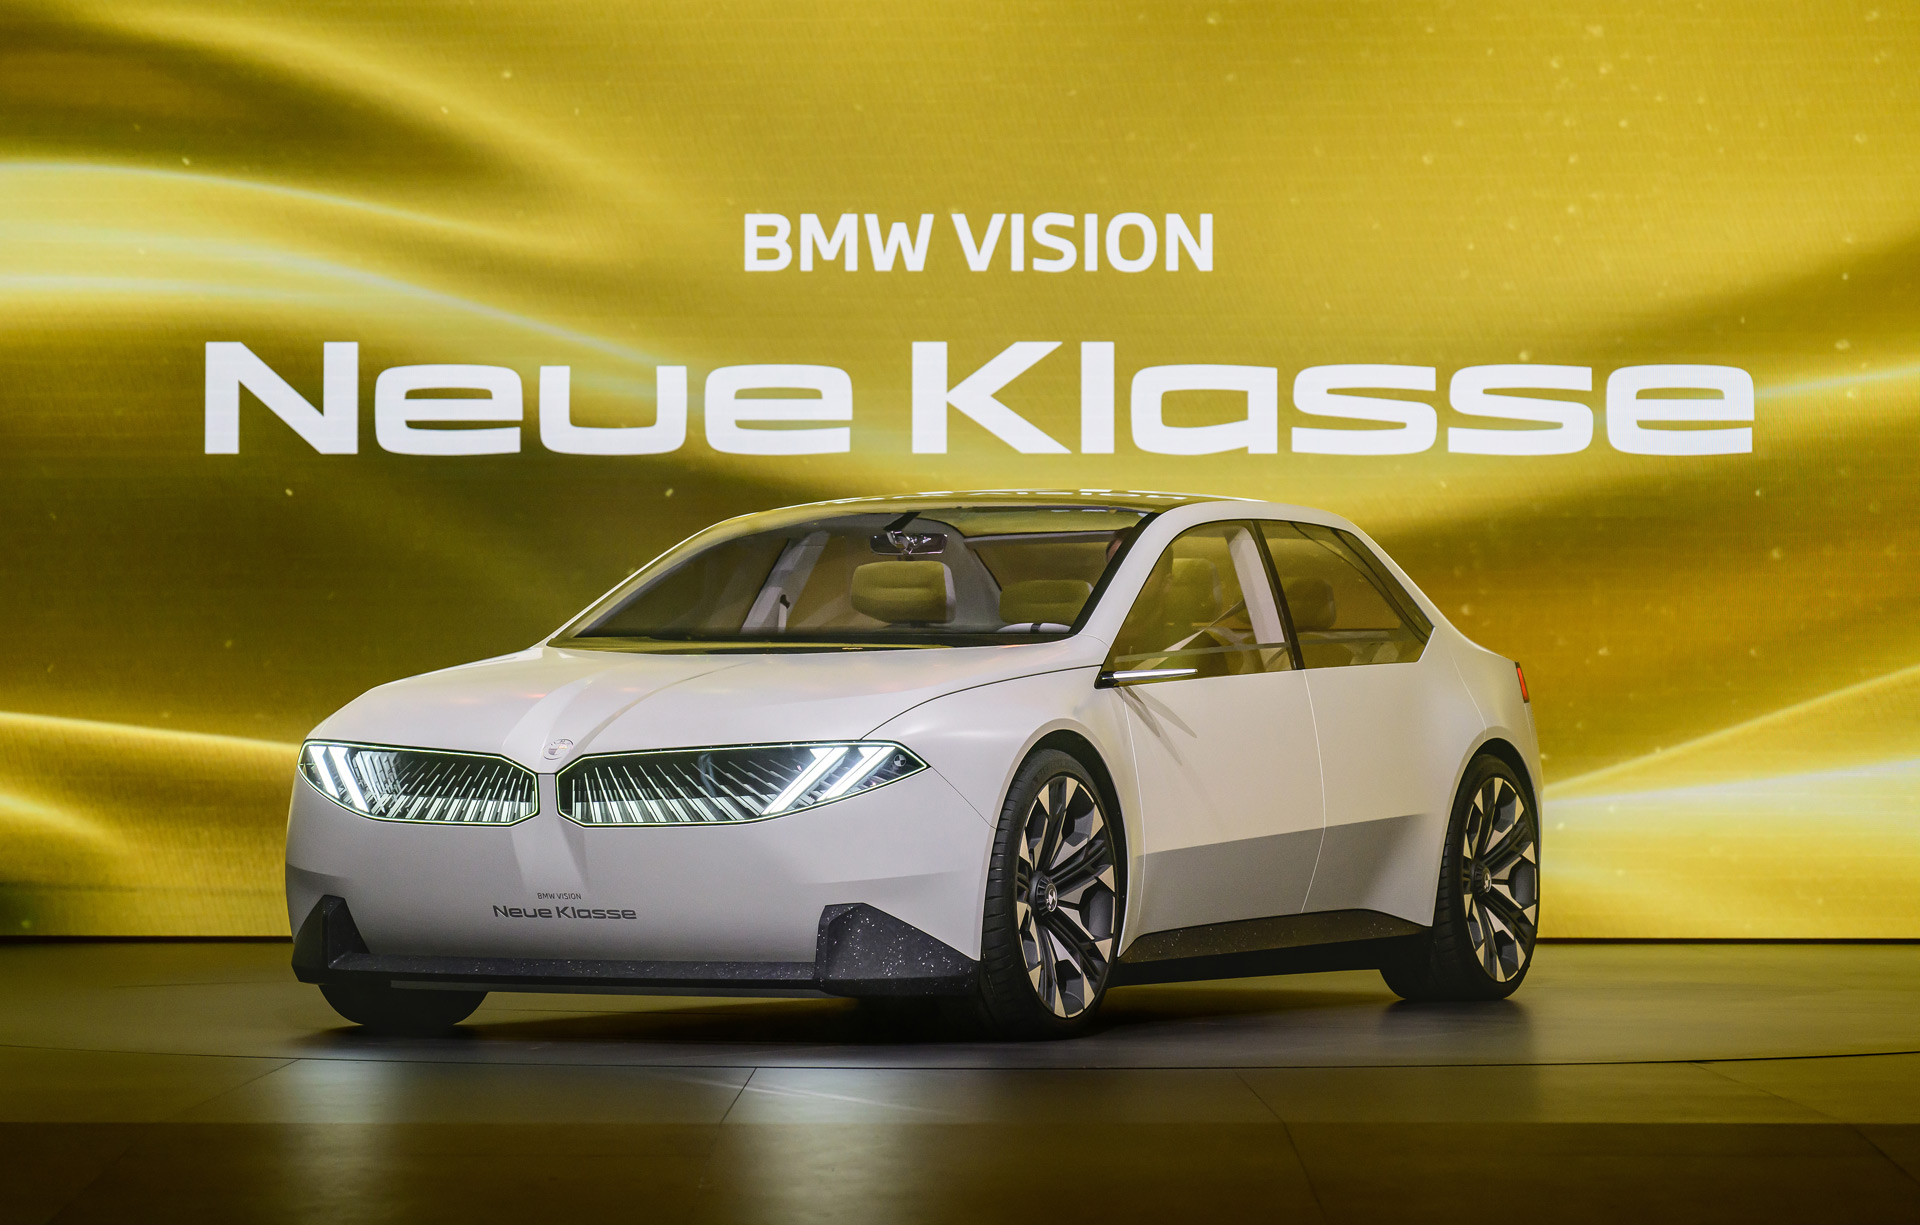 BMW may change model designations with Neue Klasse EV launch